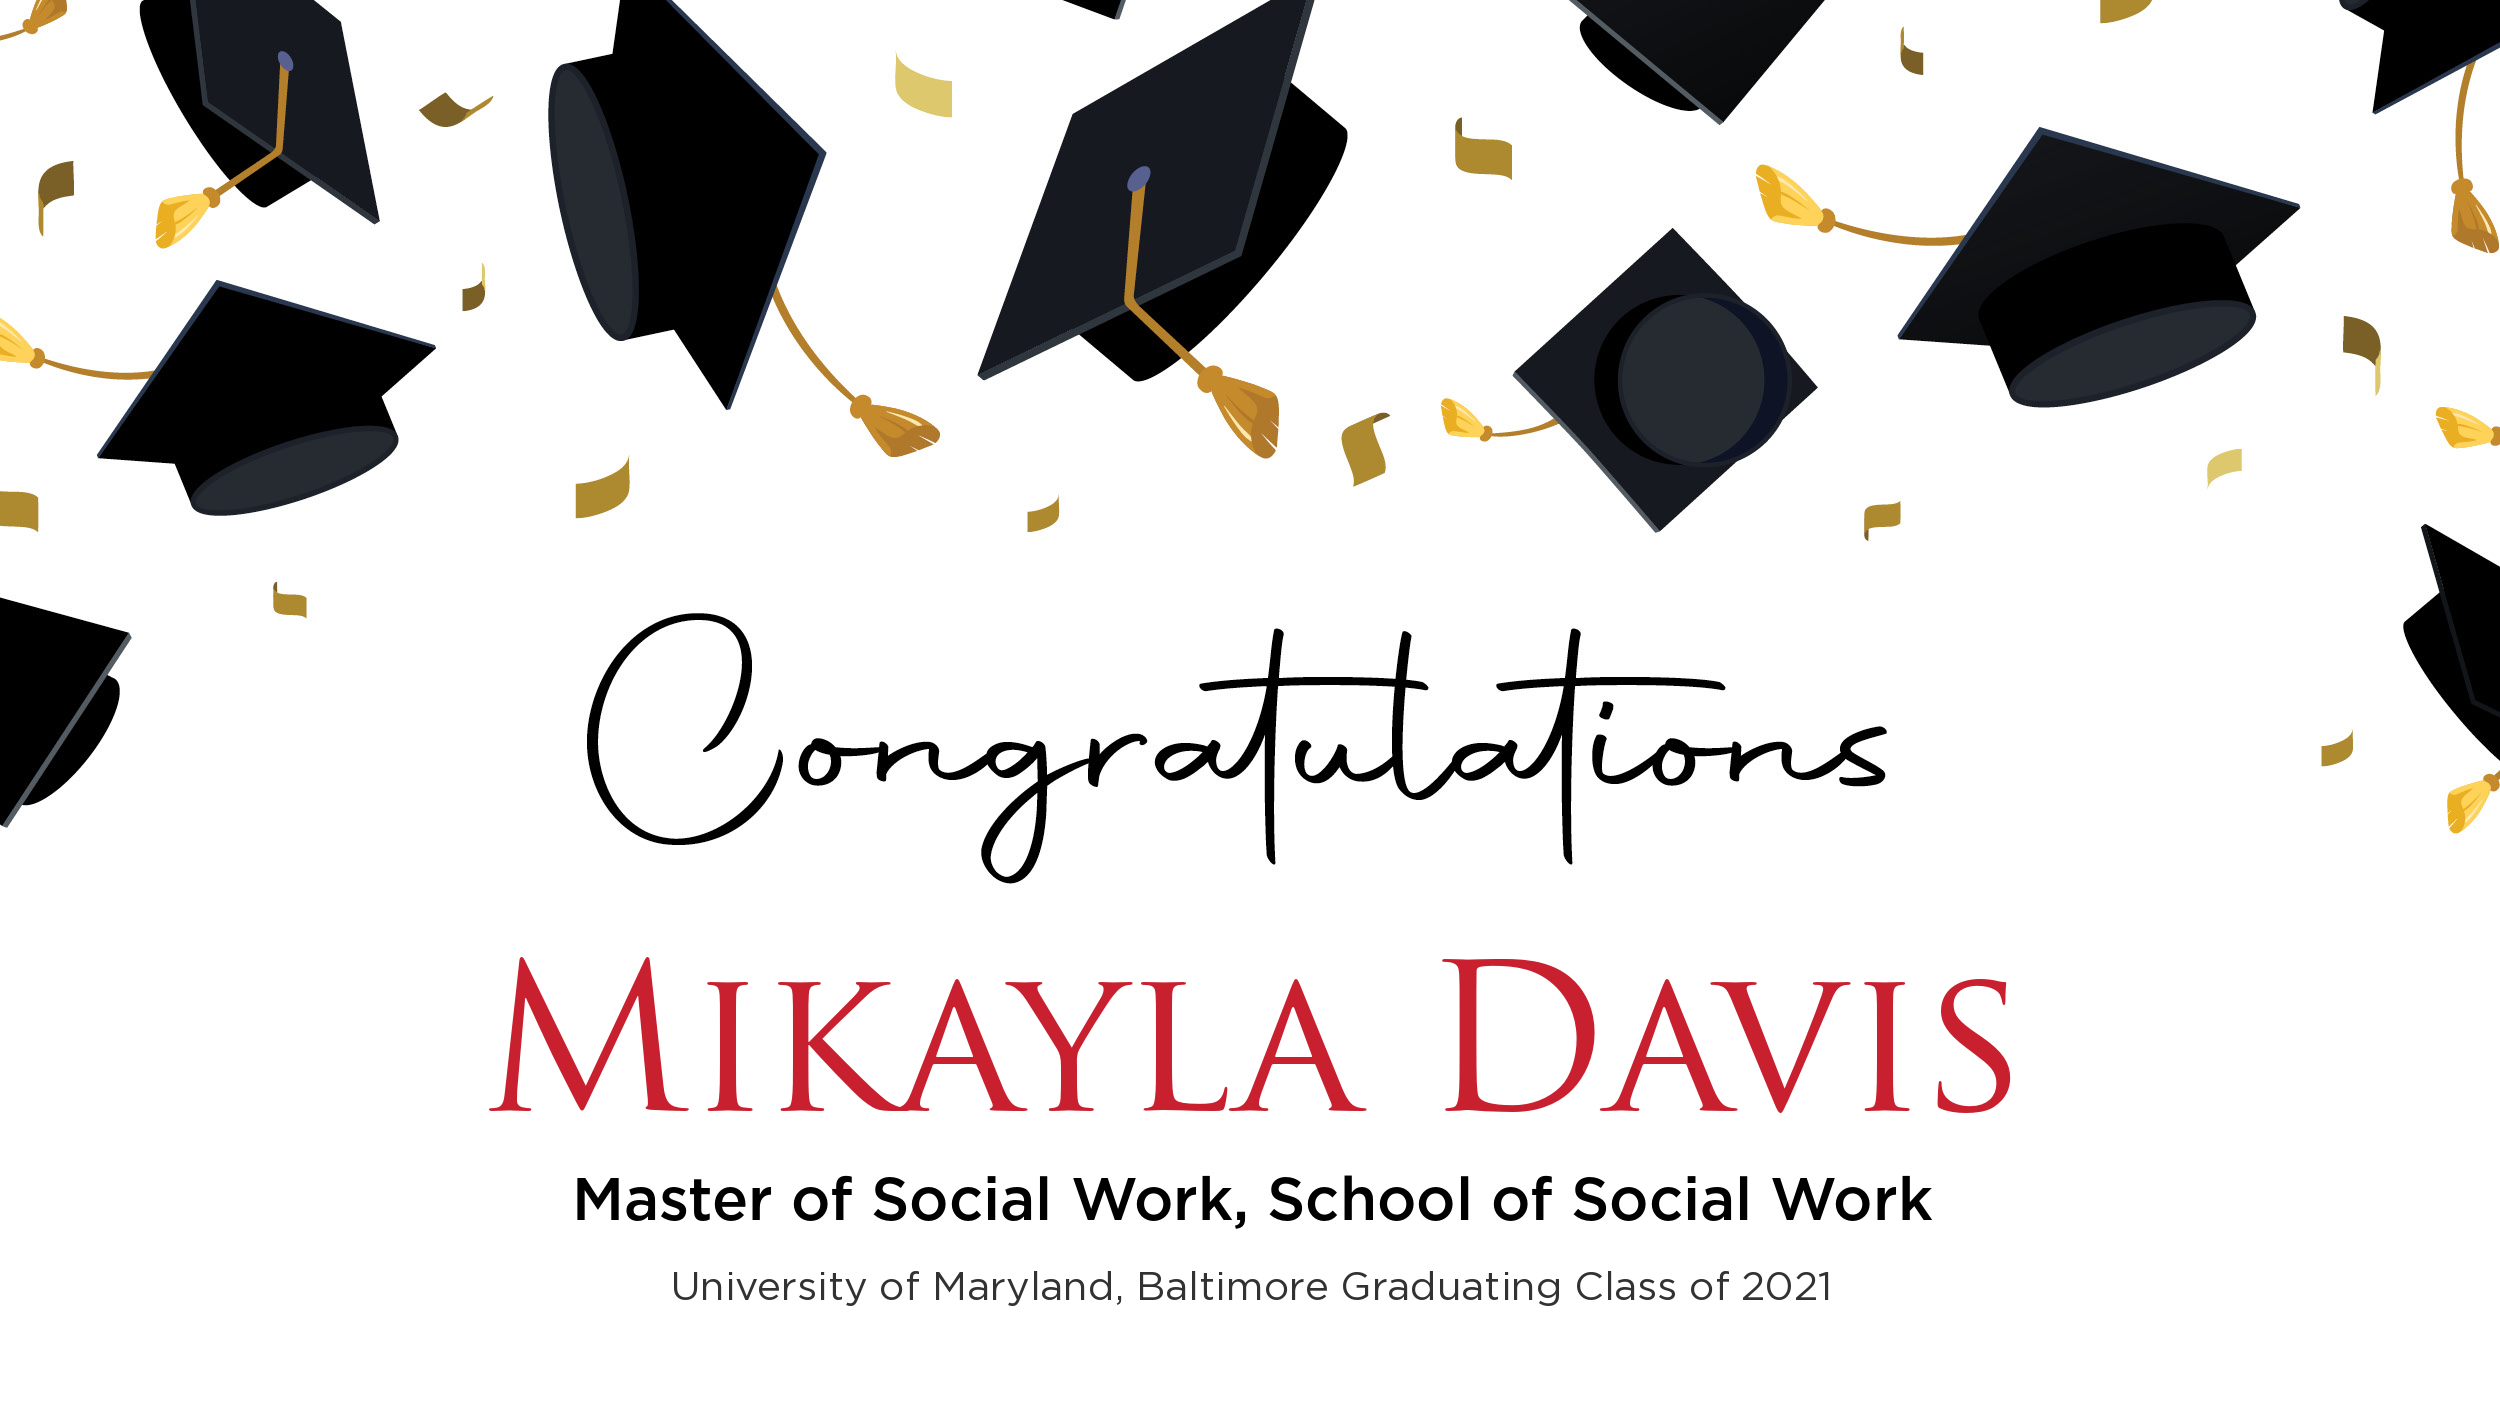 Congratulations Mikayla Davis, Master of Social Work